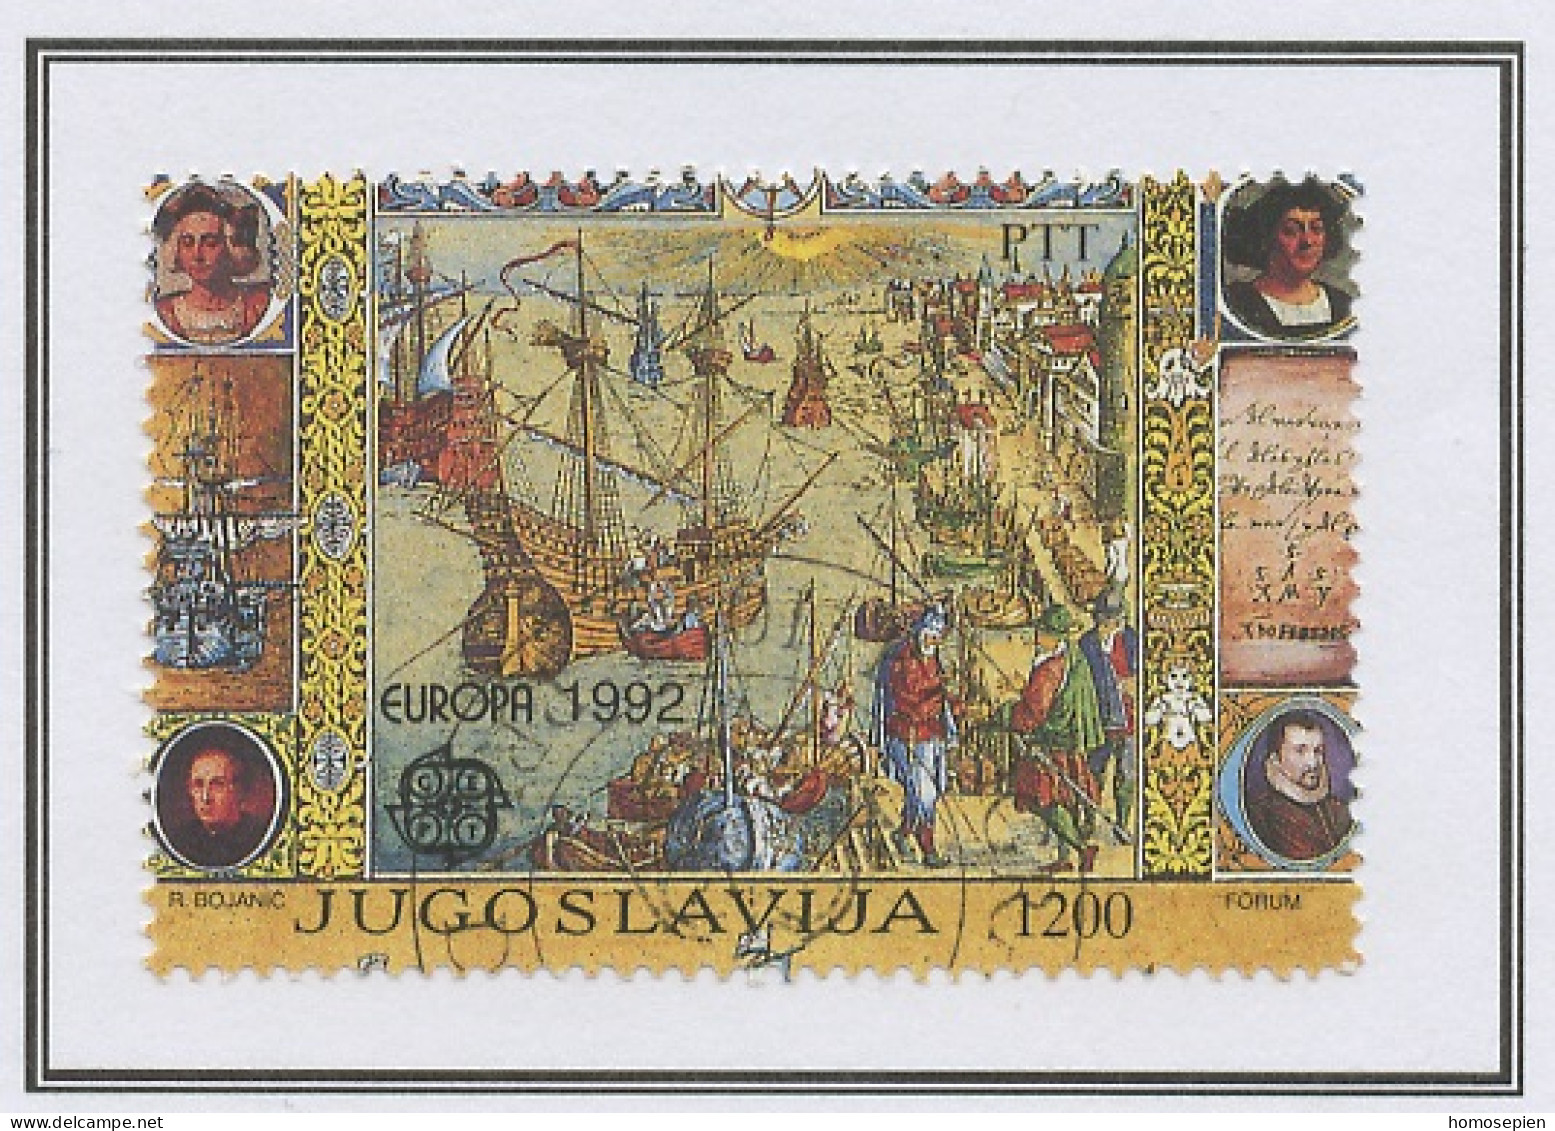 Yougoslavie - Jugoslawien - Yugoslavia 1992 Y&T N°2399 - Michel N°2536 (o) - 1200d EUROPA - Gebruikt